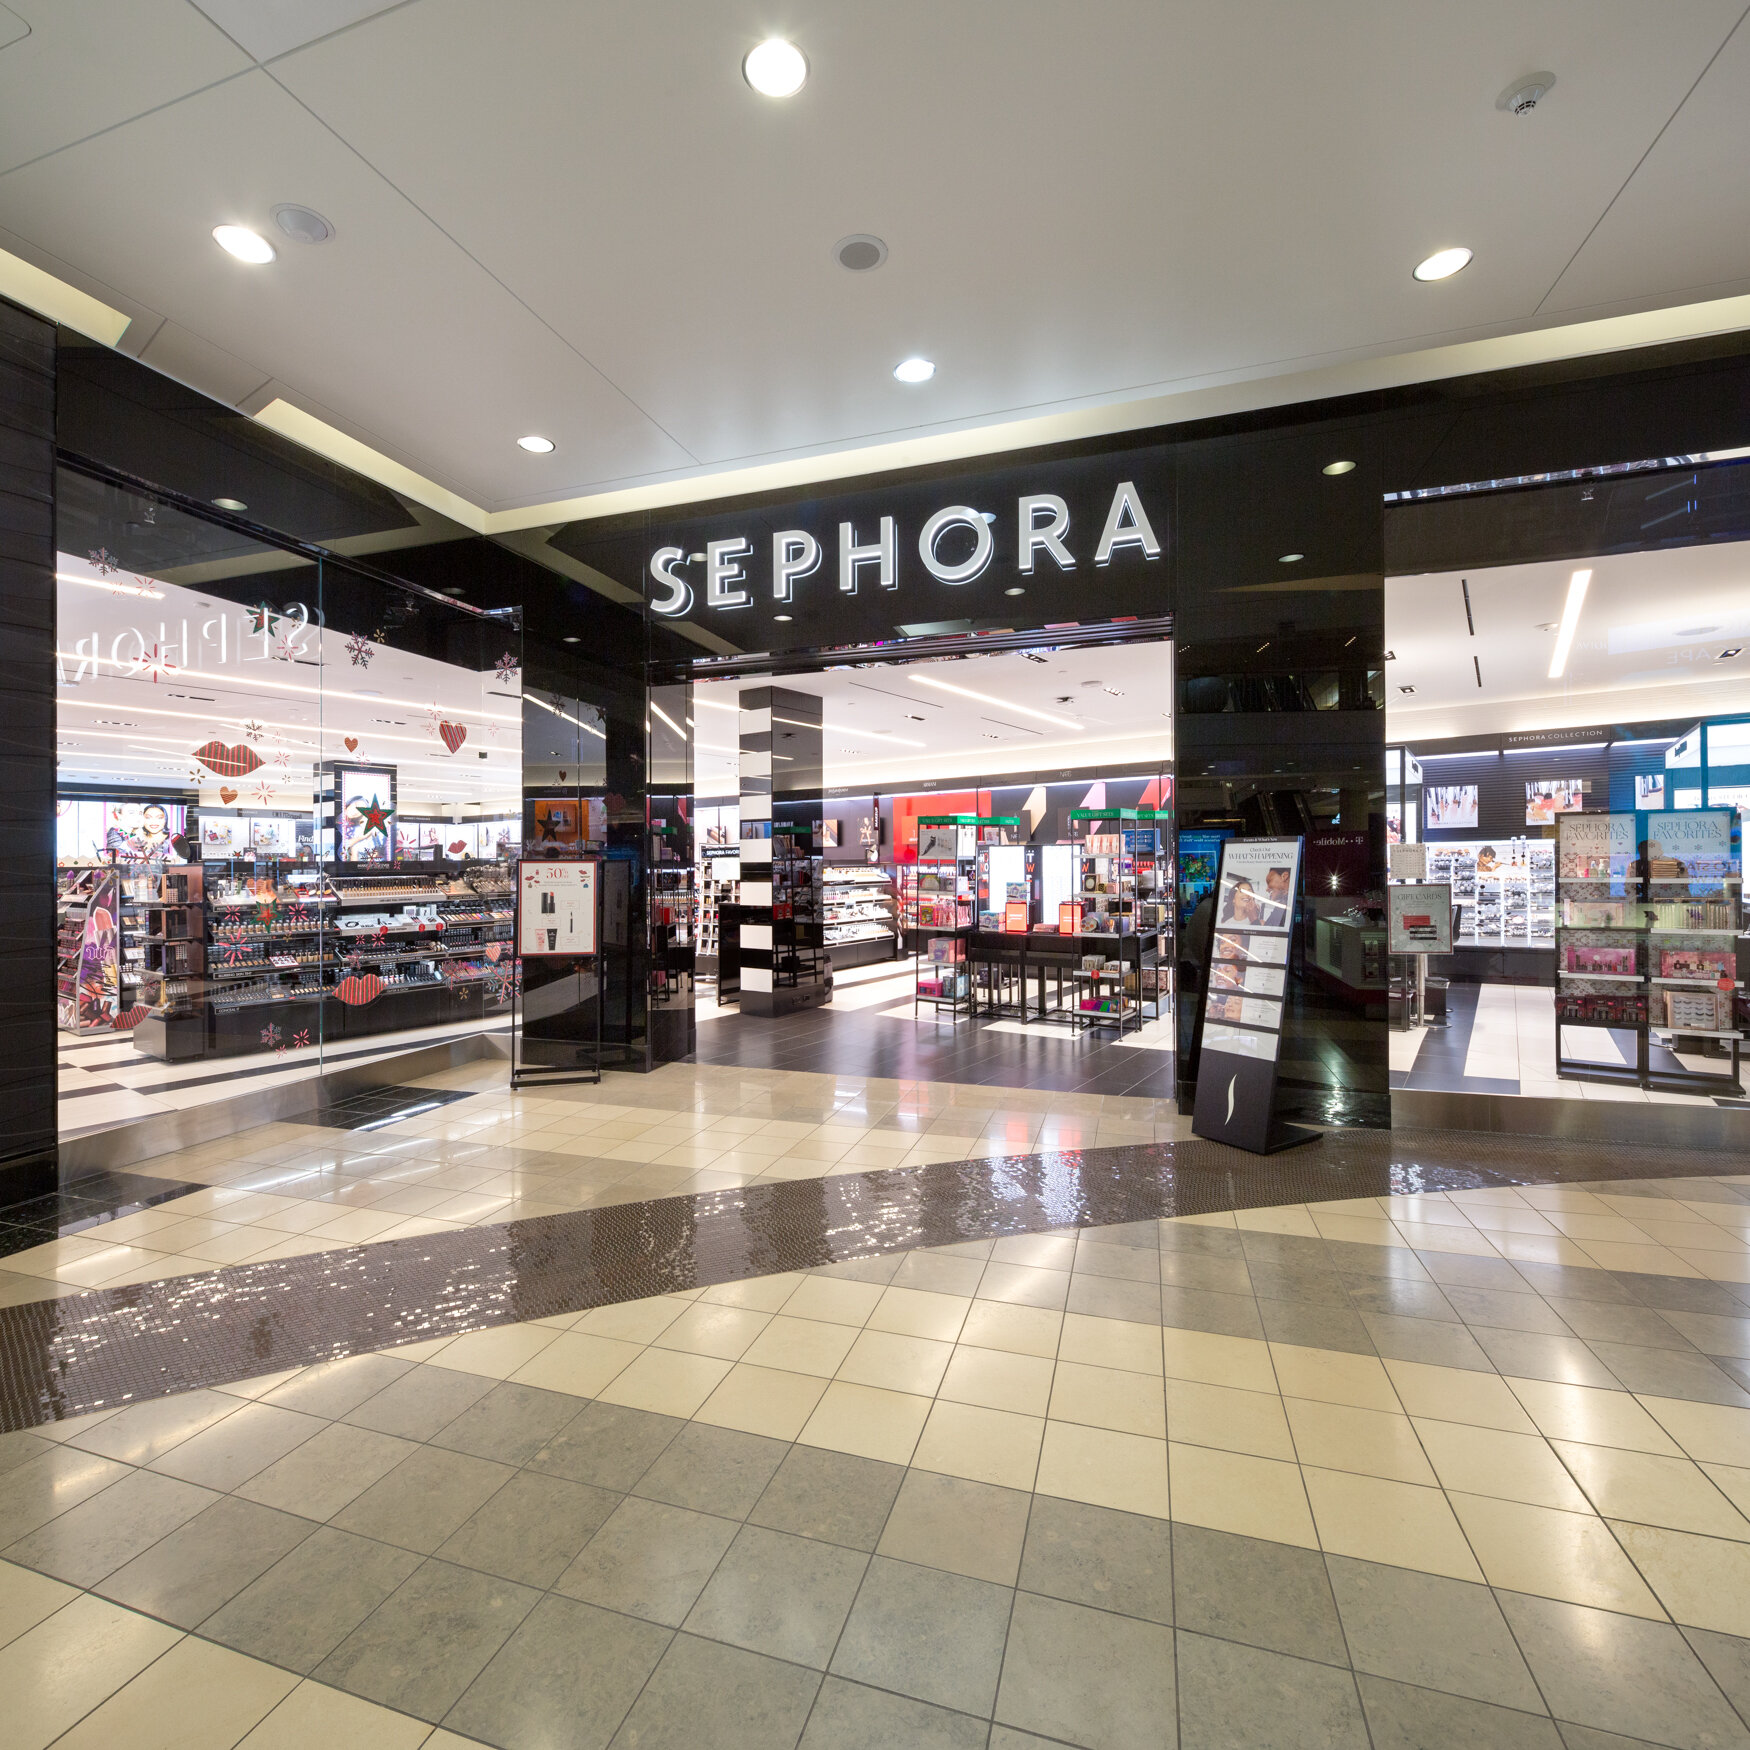 Sephora retail interiors by brightroomSF Interior photograohy-6.jpg